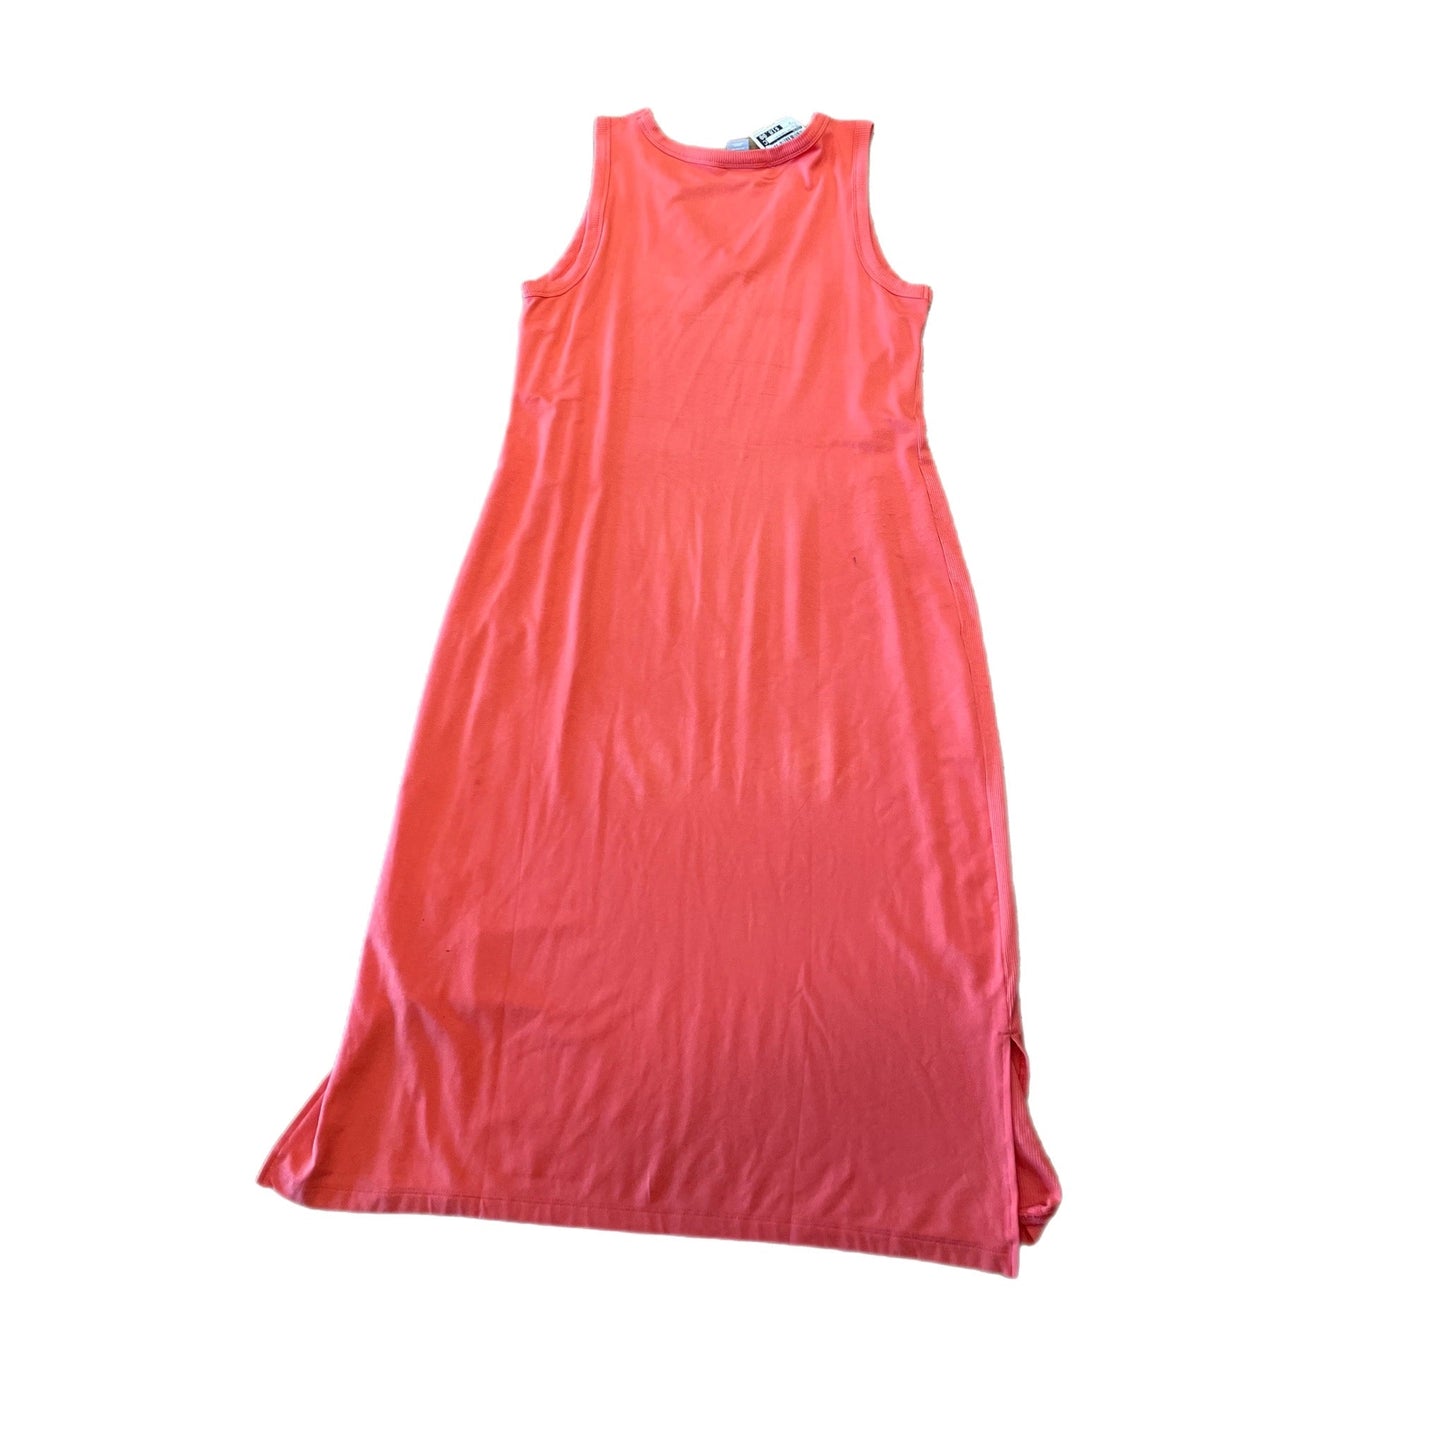 Dress Long Sleeveless By Chicos Zenergy  Size: 0 (size small)